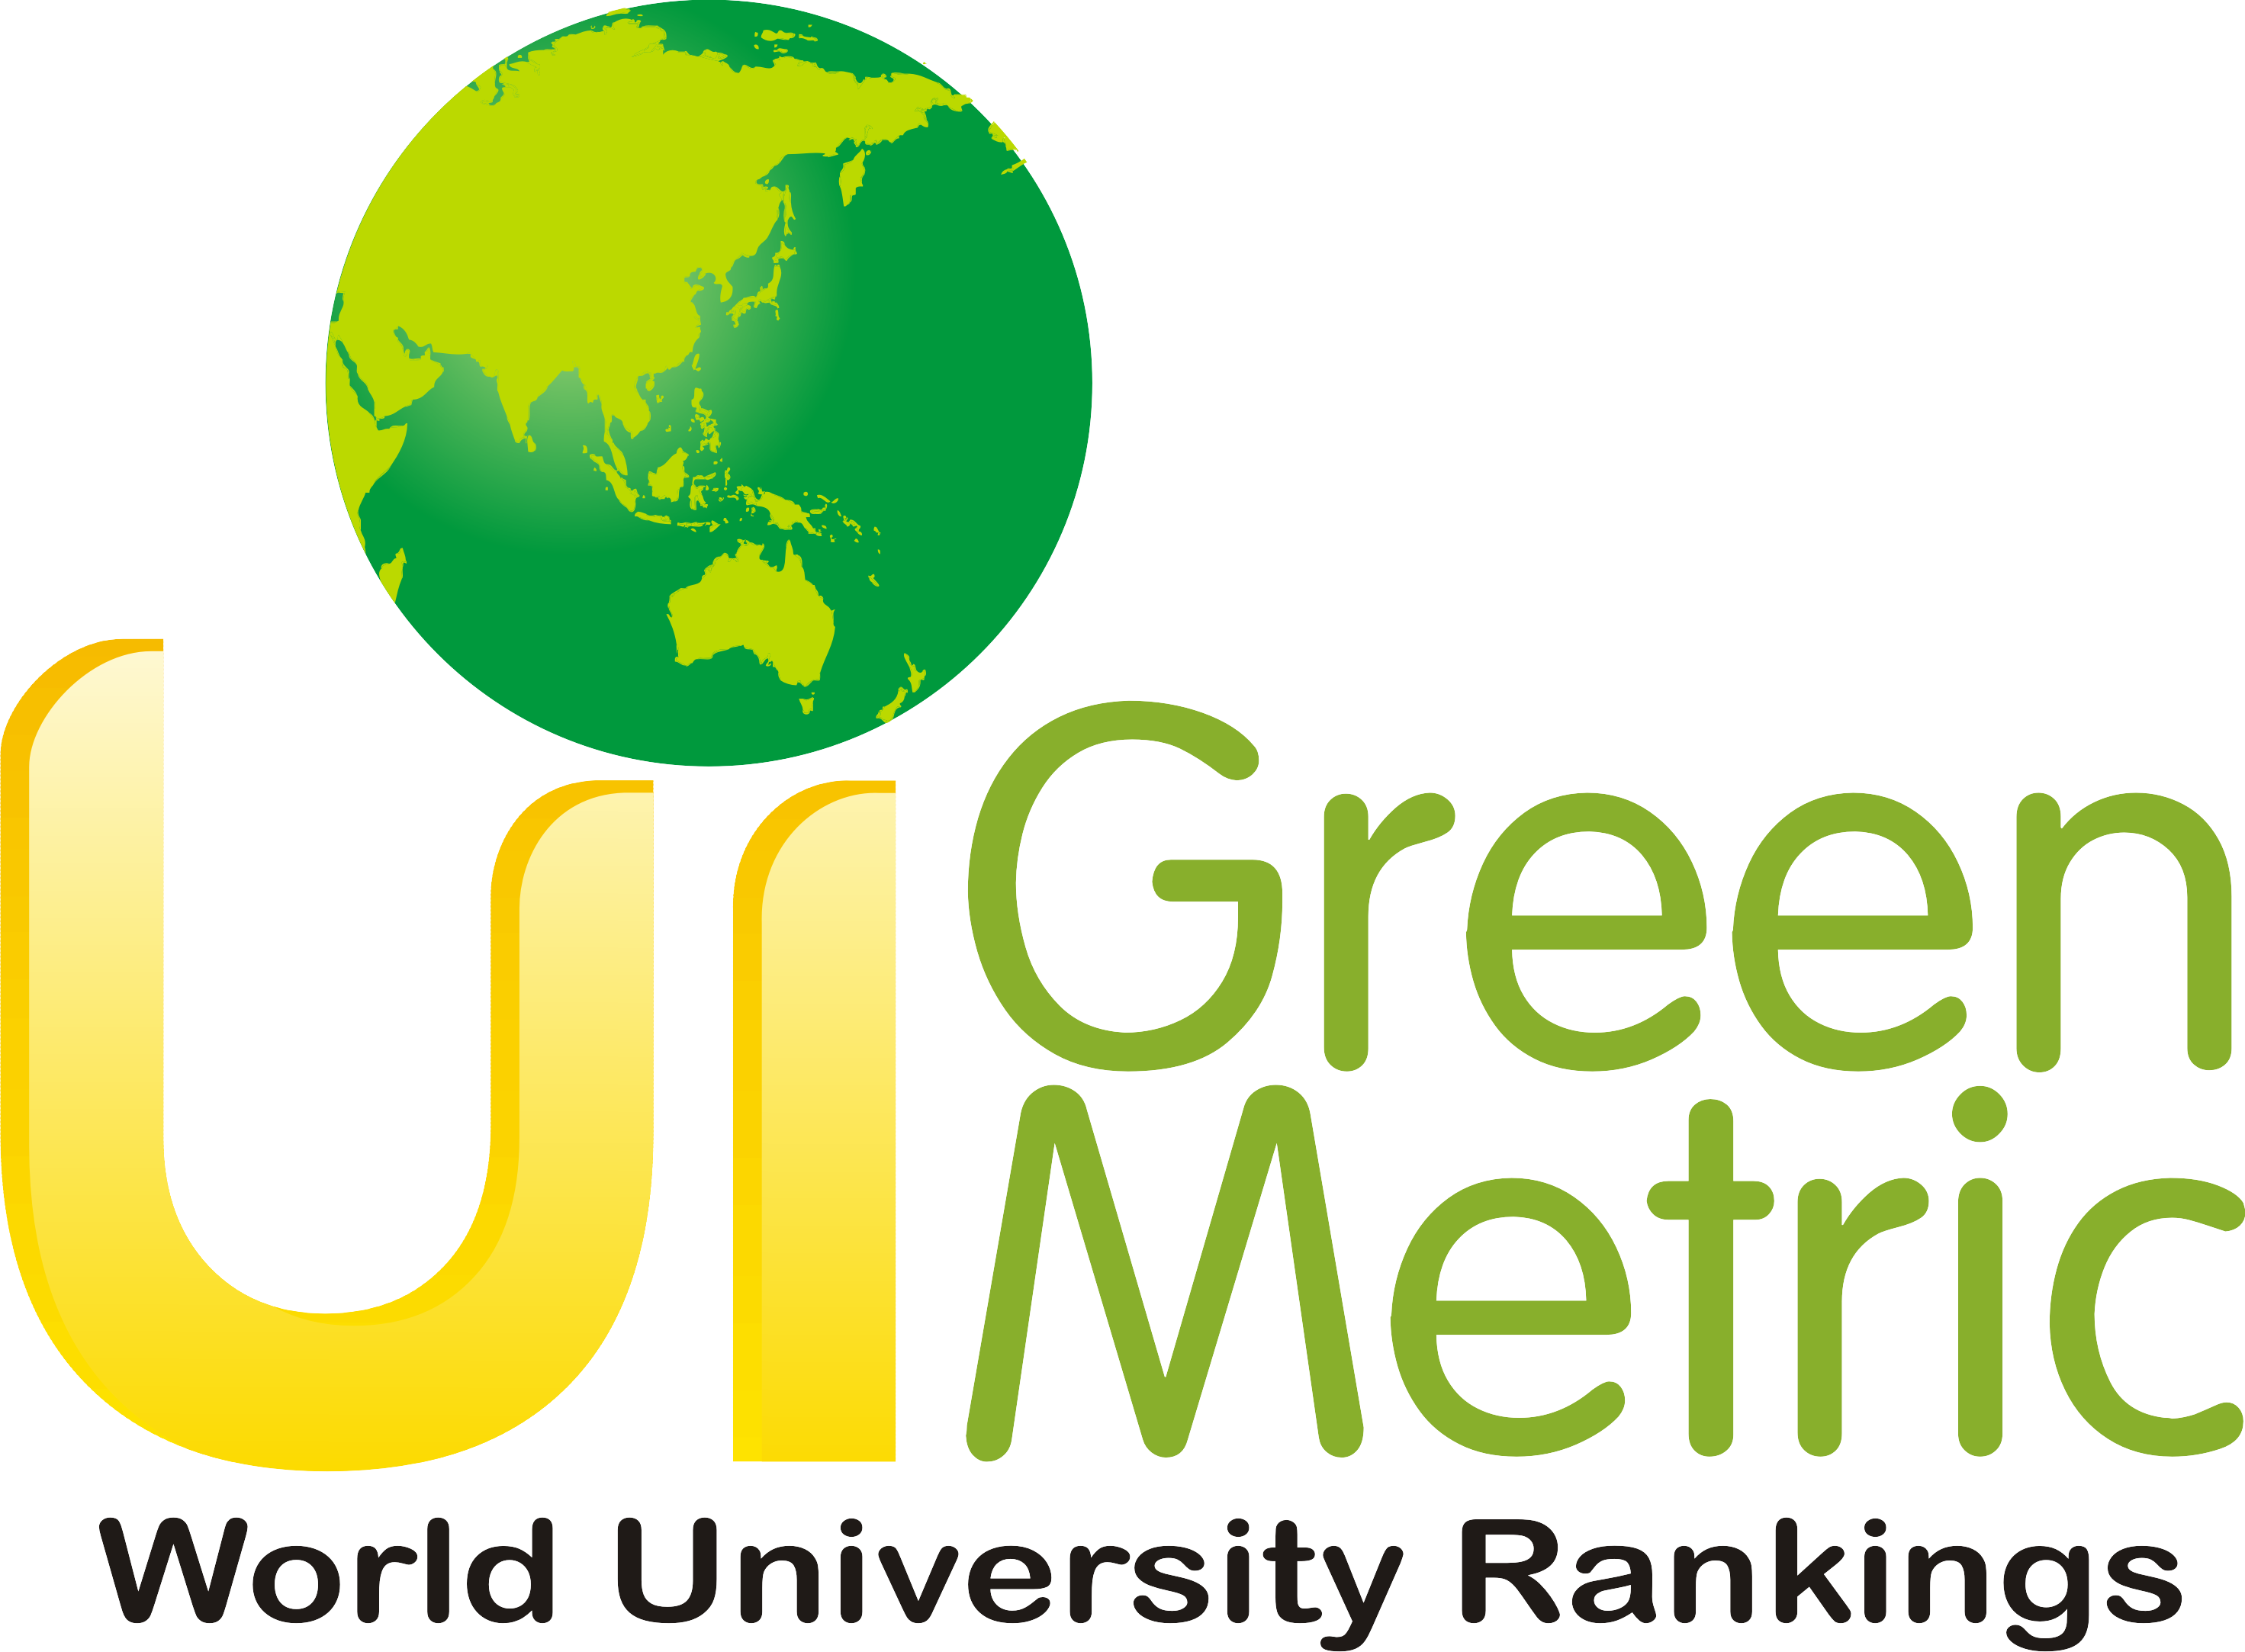 UI GreenMetric Rankings - logo